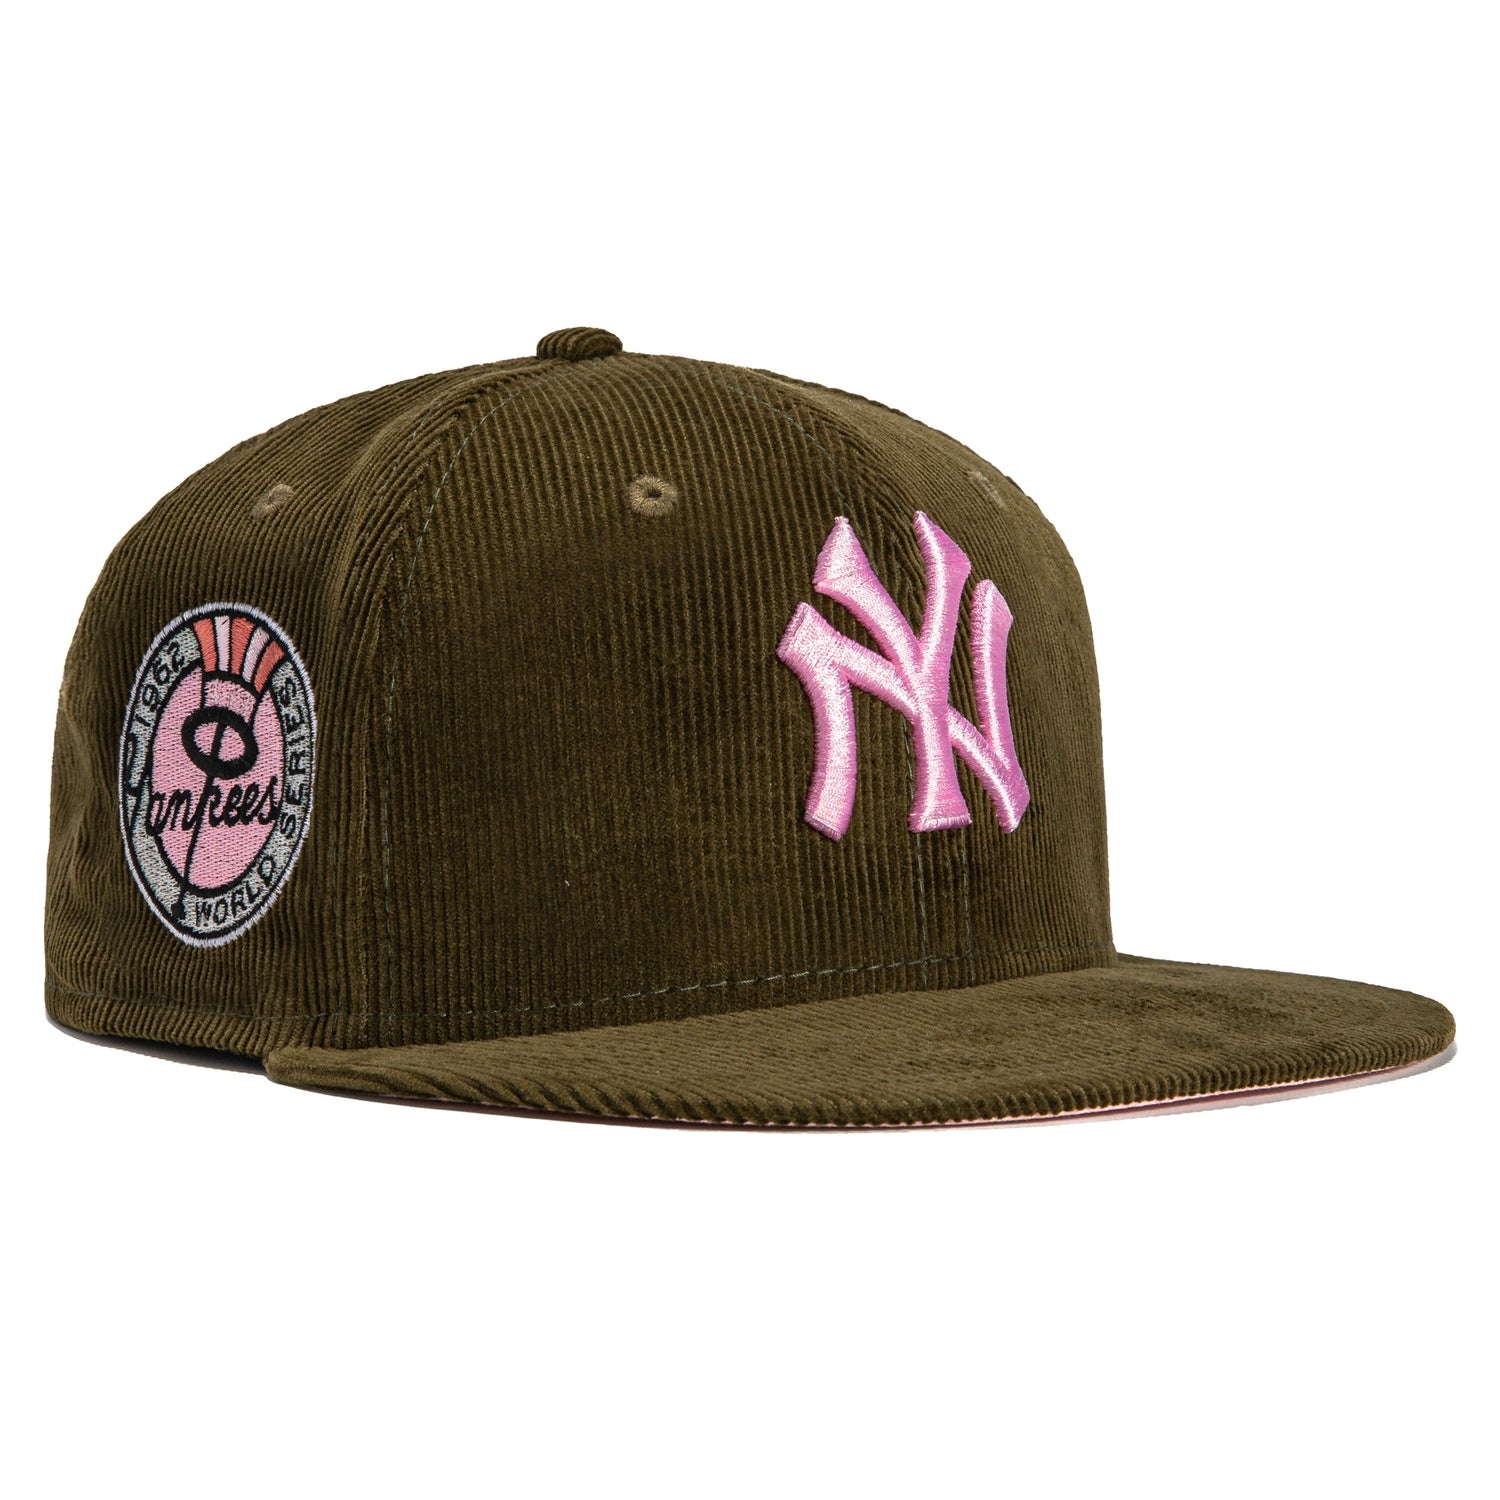 New York Yankees New Era Corduroy Visor 59FIFTY Fitted Hat - Cream/Brown